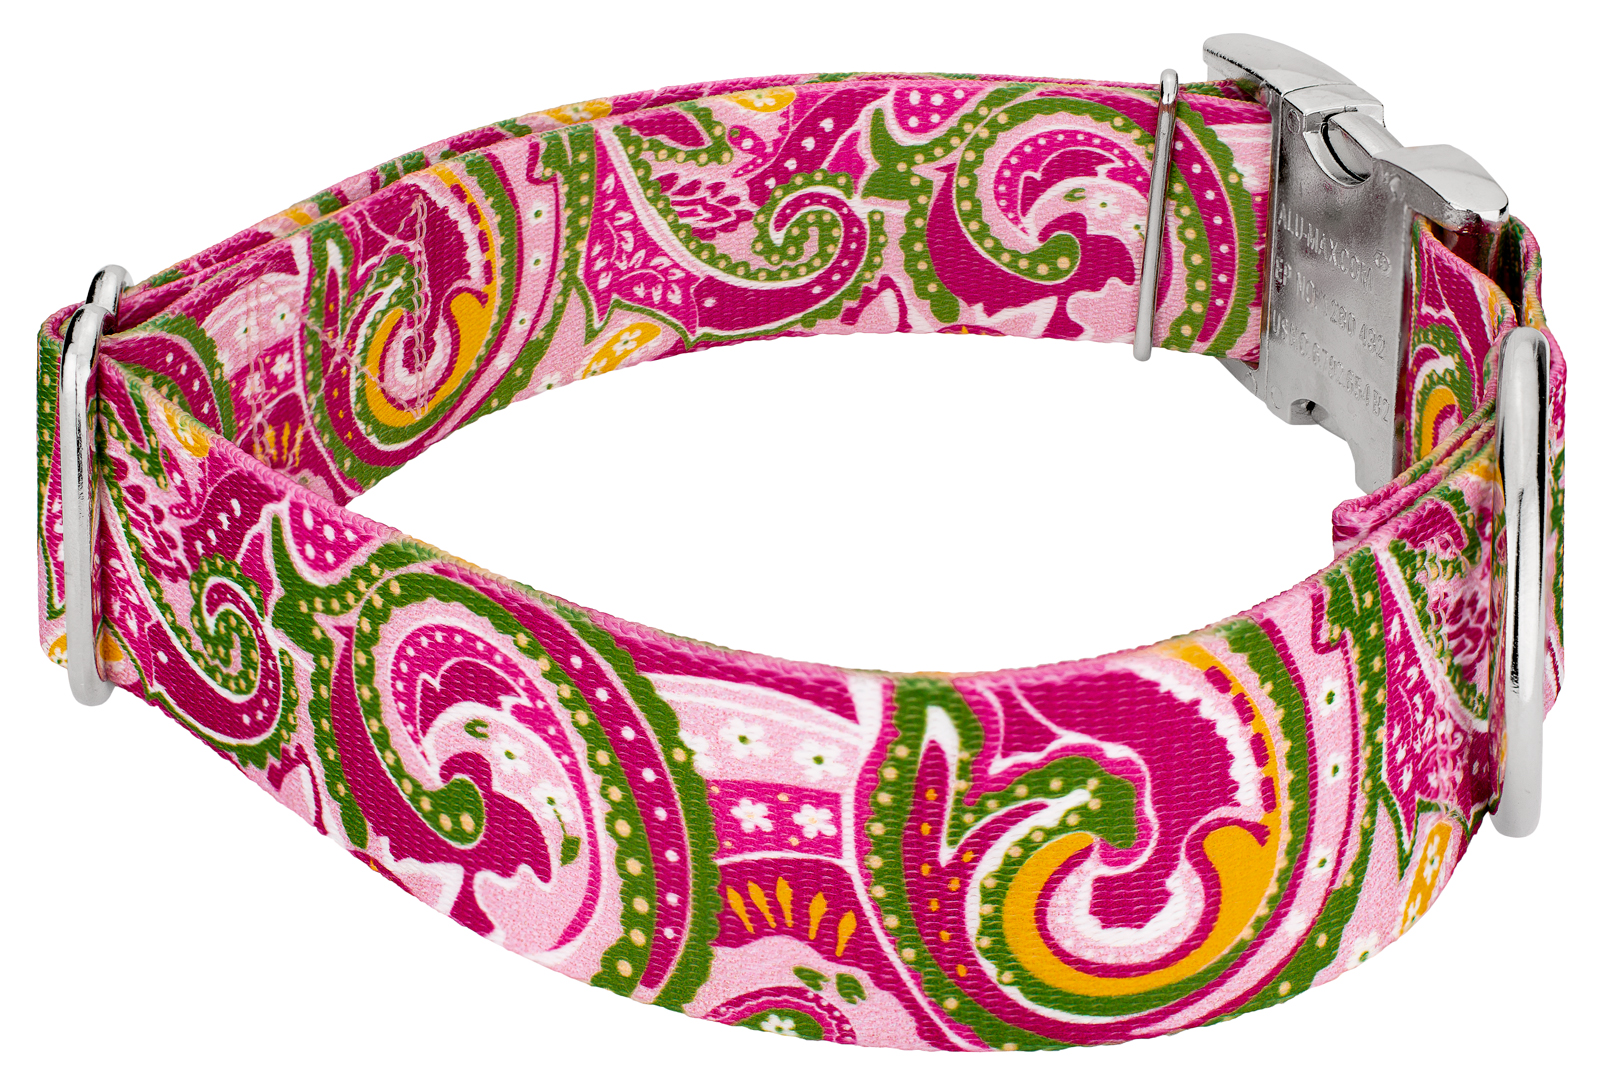 Country Brook Petz® 1 1/2 inch Premium Pink Paisley Dog Collar, Medium - image 6 of 10